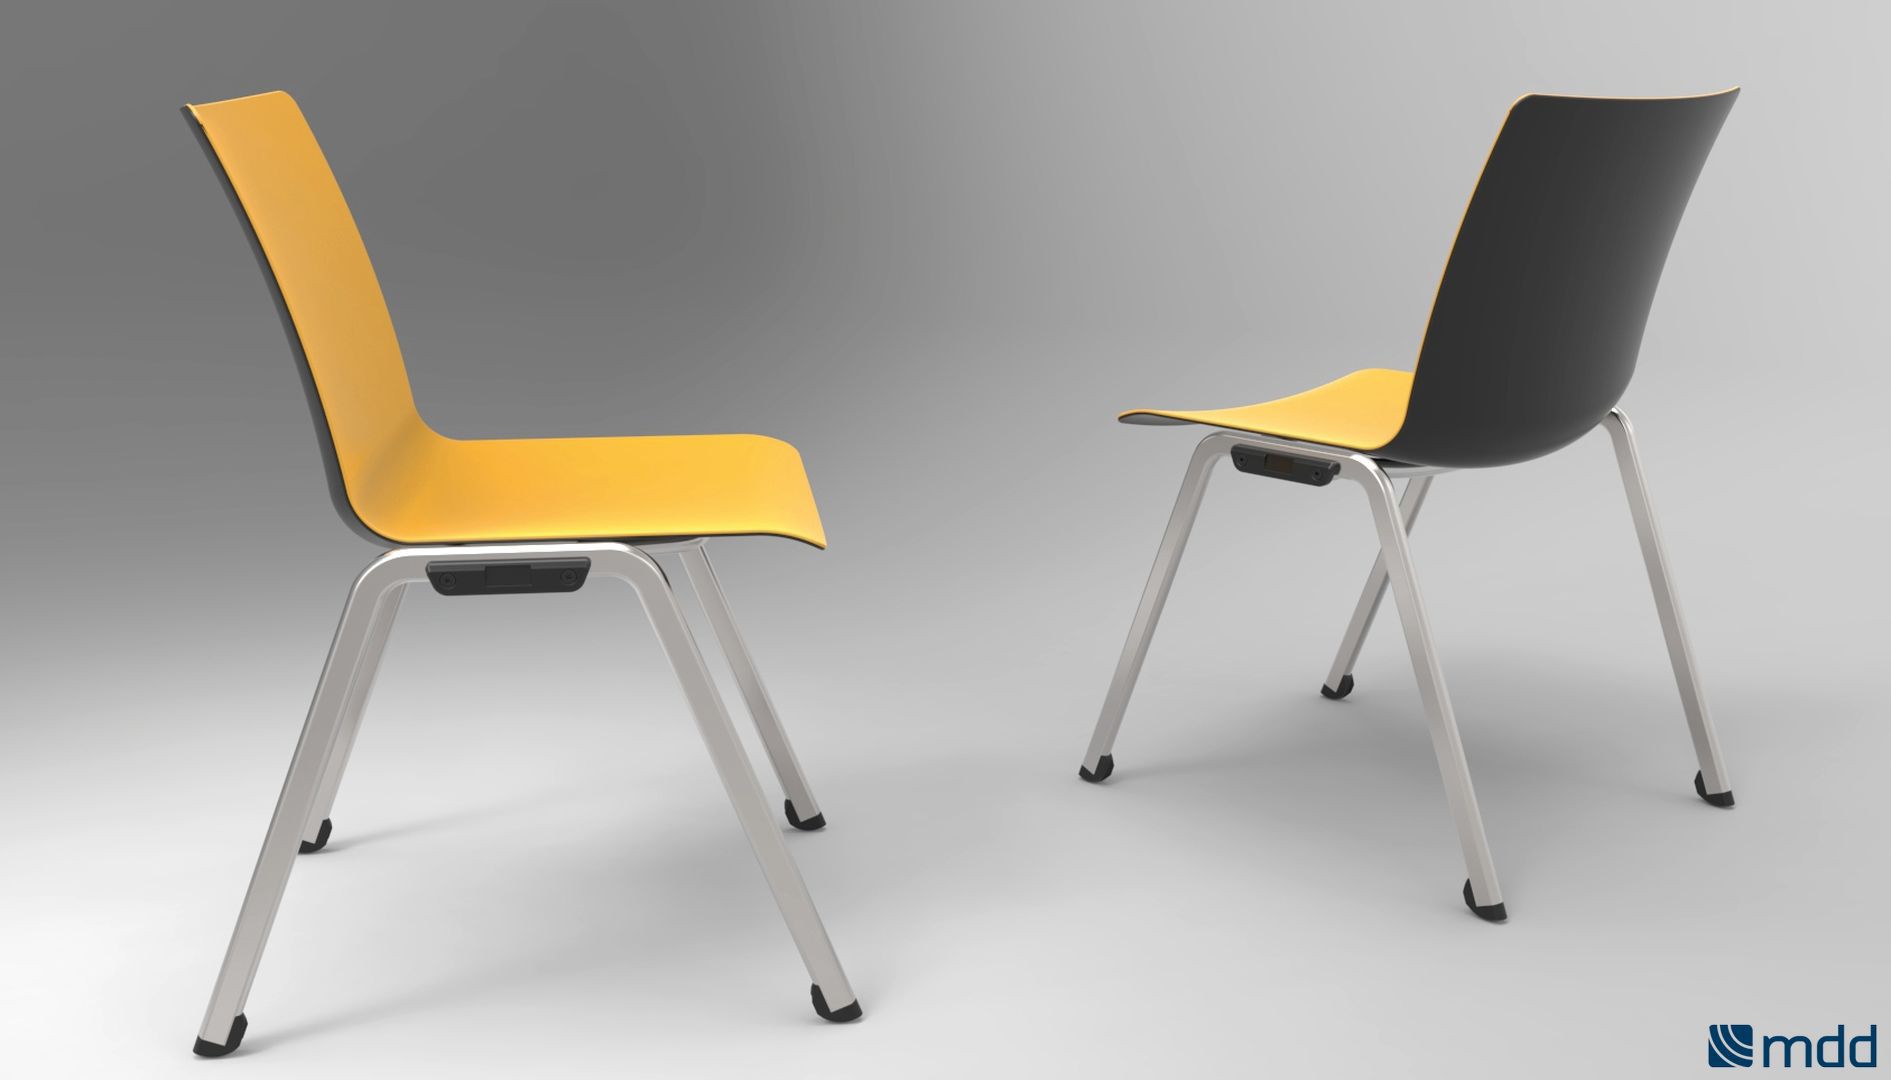 Krzesła z serii Shila firmy MDD. Projekt: Javier Cuñado. Fot. MDD